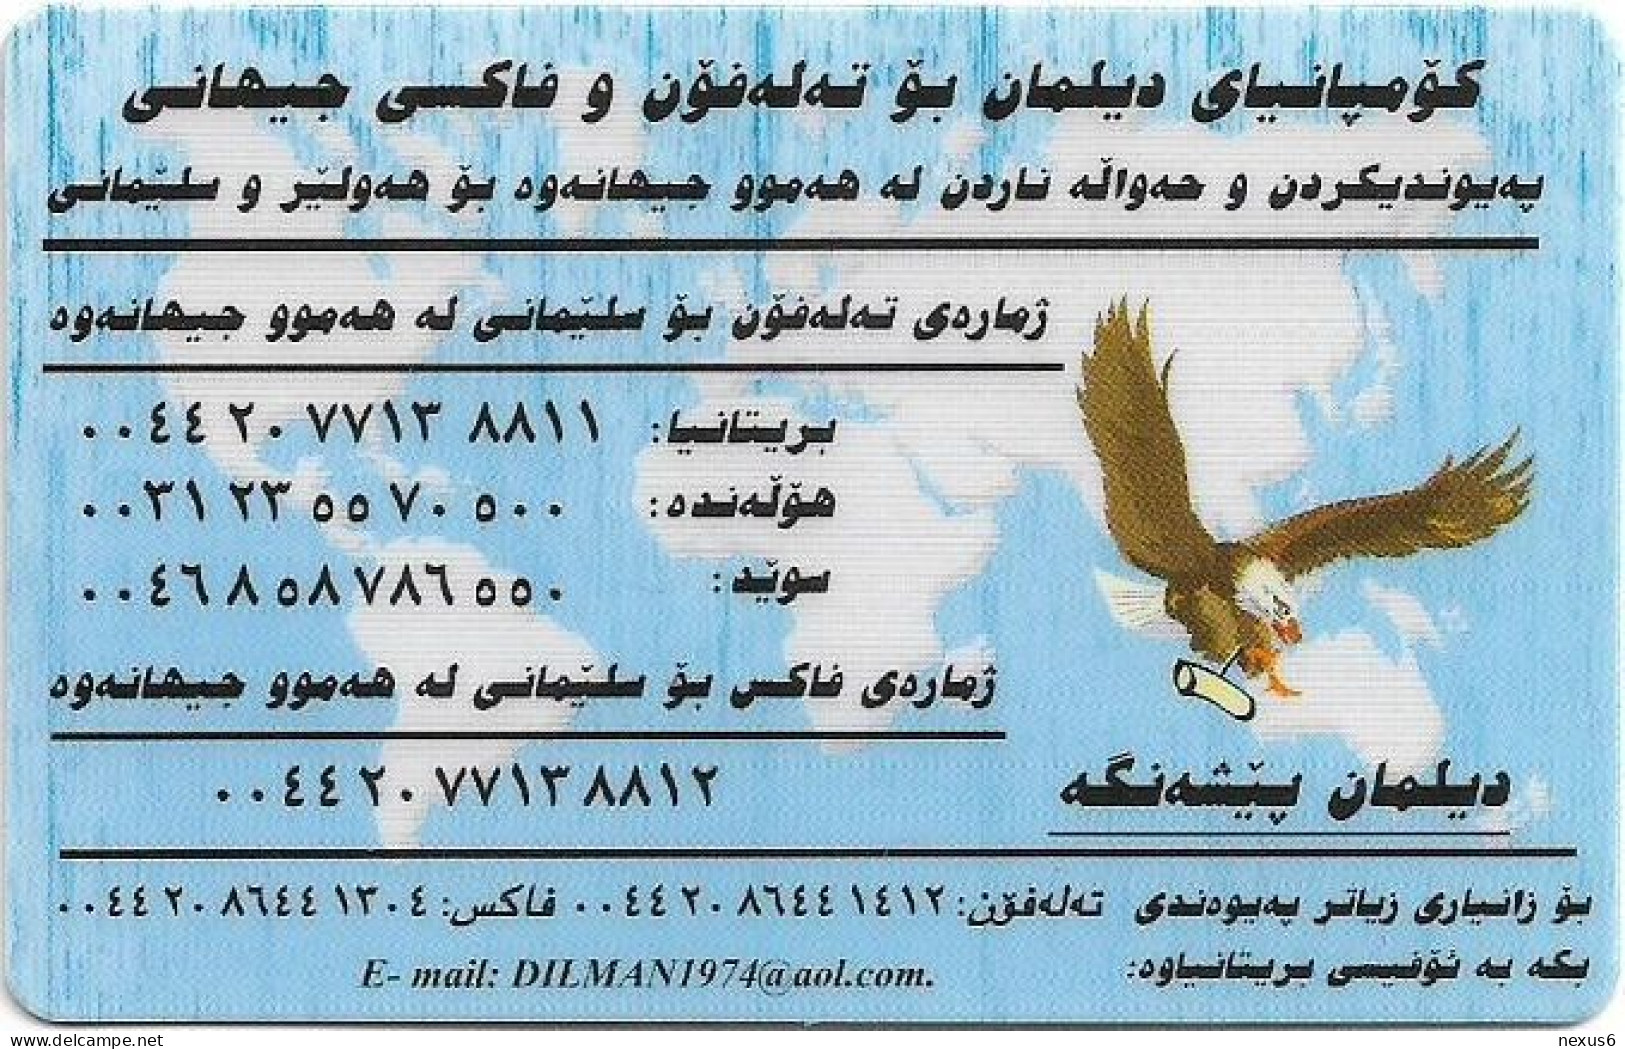 UK & Others - DILMAN (Kurdistan Calls) - Dilman Is The Best, Eagle (Light Blue Issue), Remote Mem. No FV, Used - Bedrijven Uitgaven